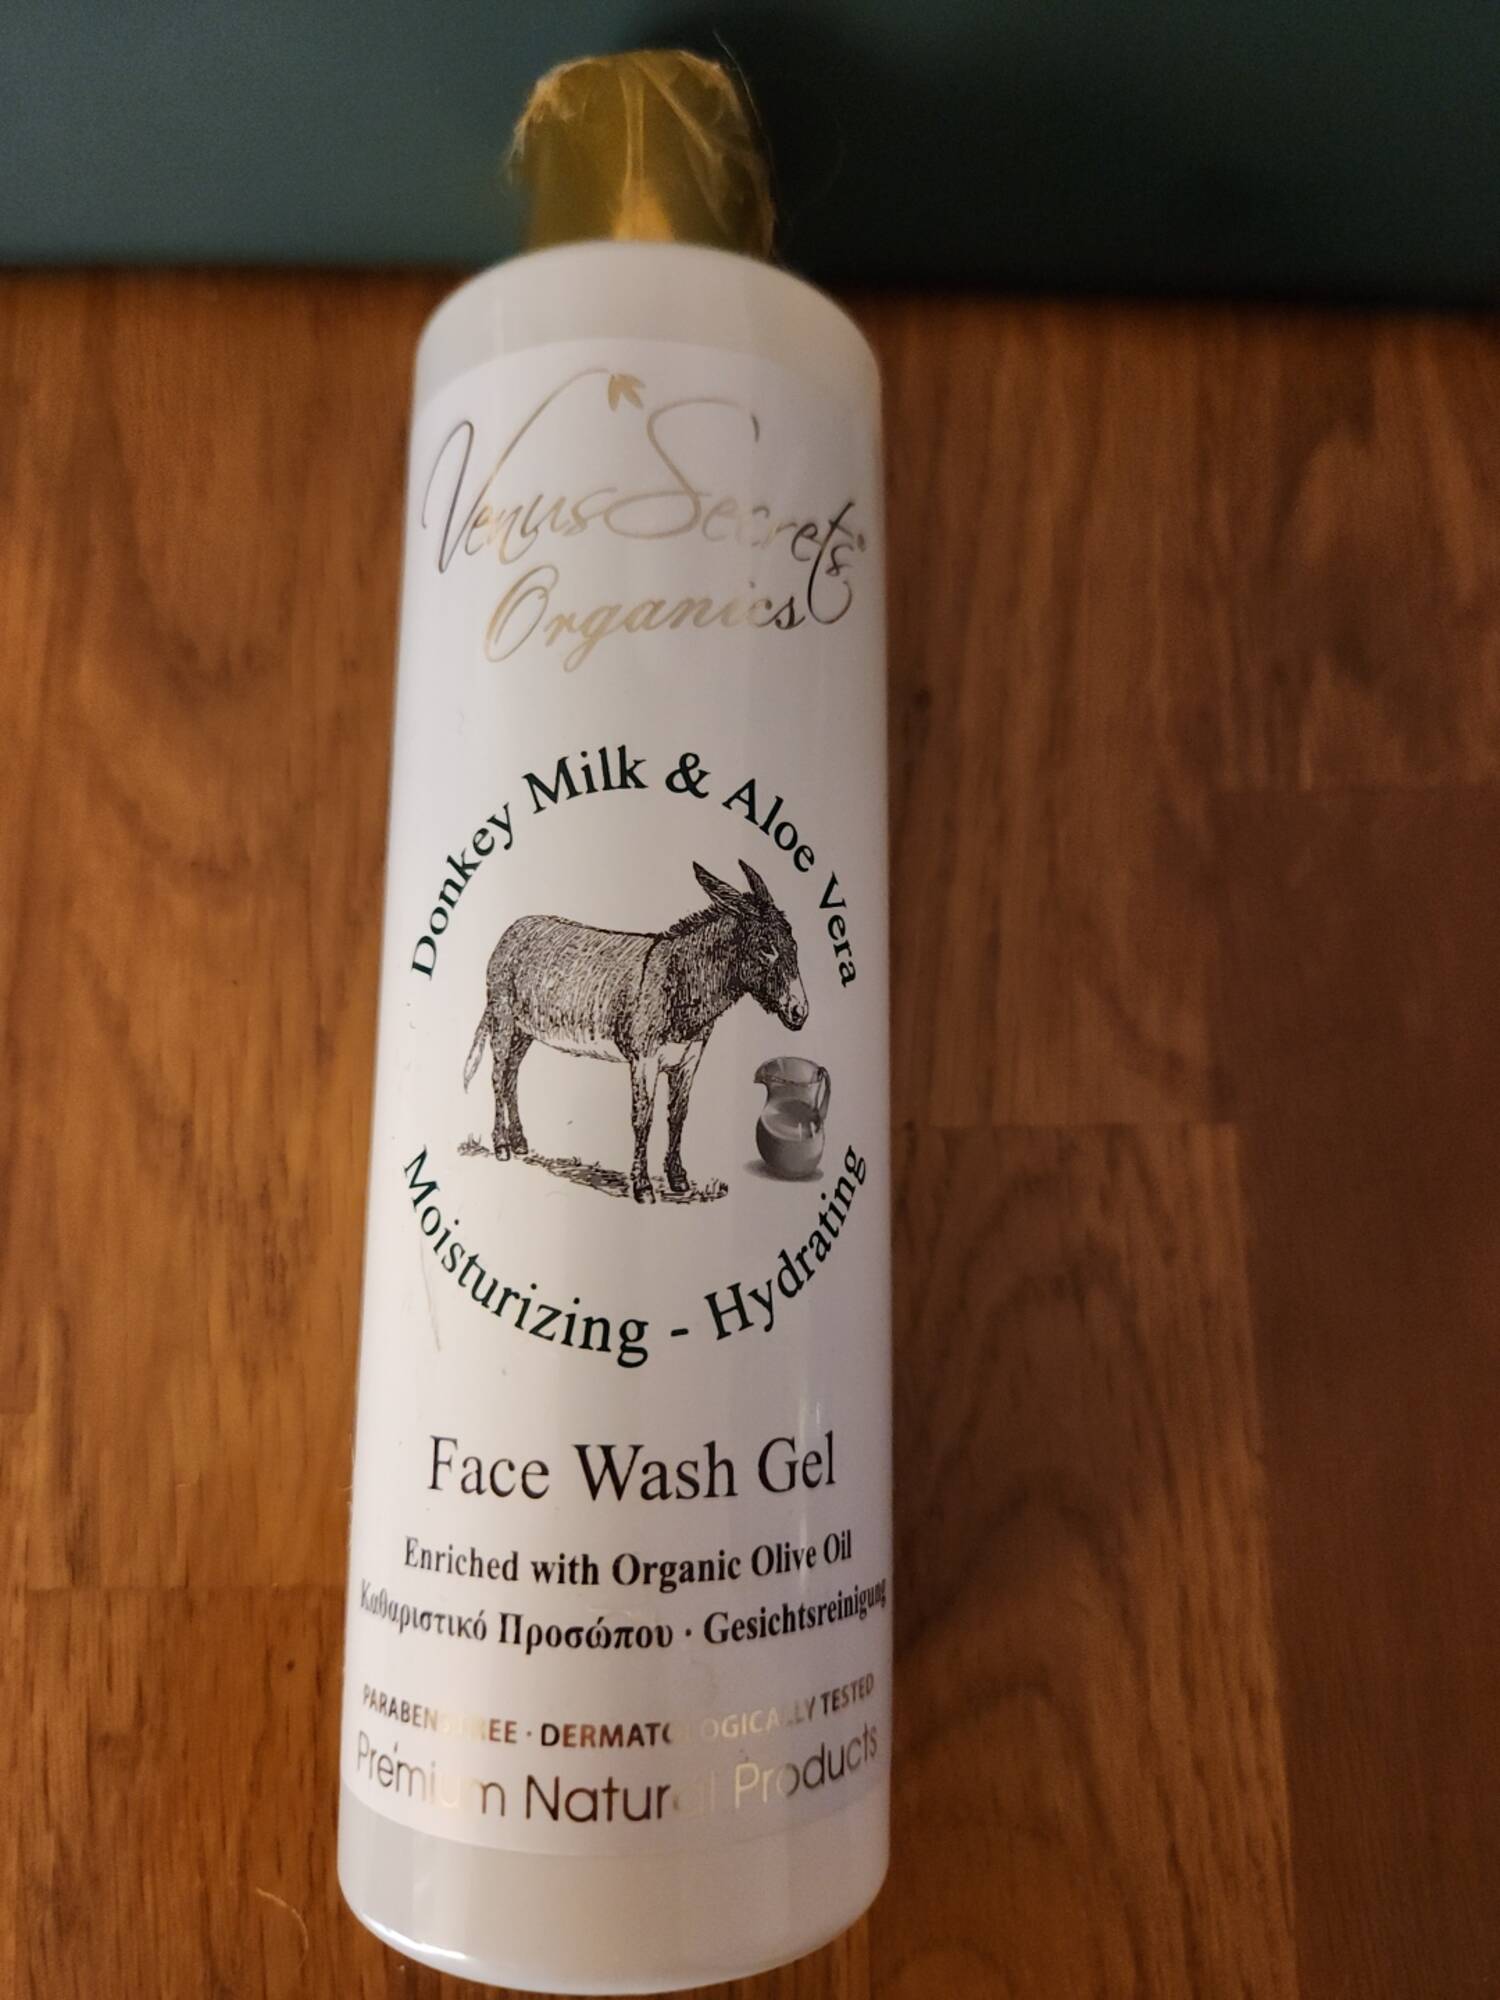 VENUS SECRETS - Donkey milk & aloe vera - Face Wash gel